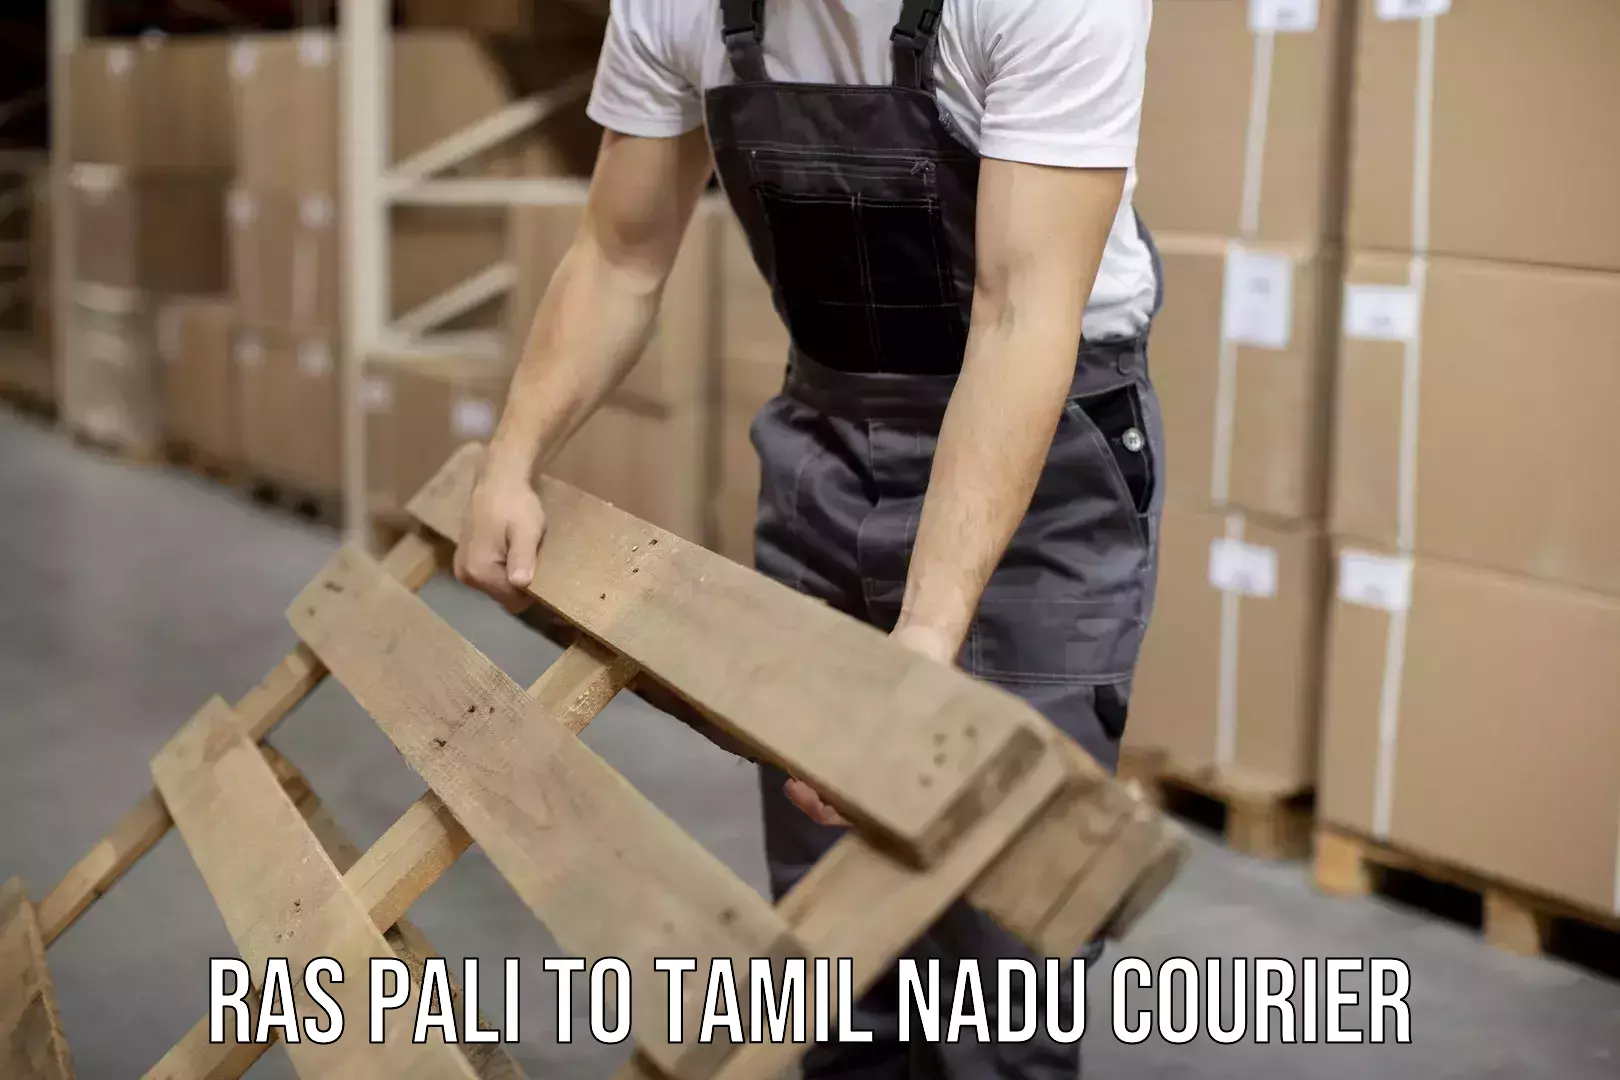 Next-day freight services Ras Pali to Tamil Nadu